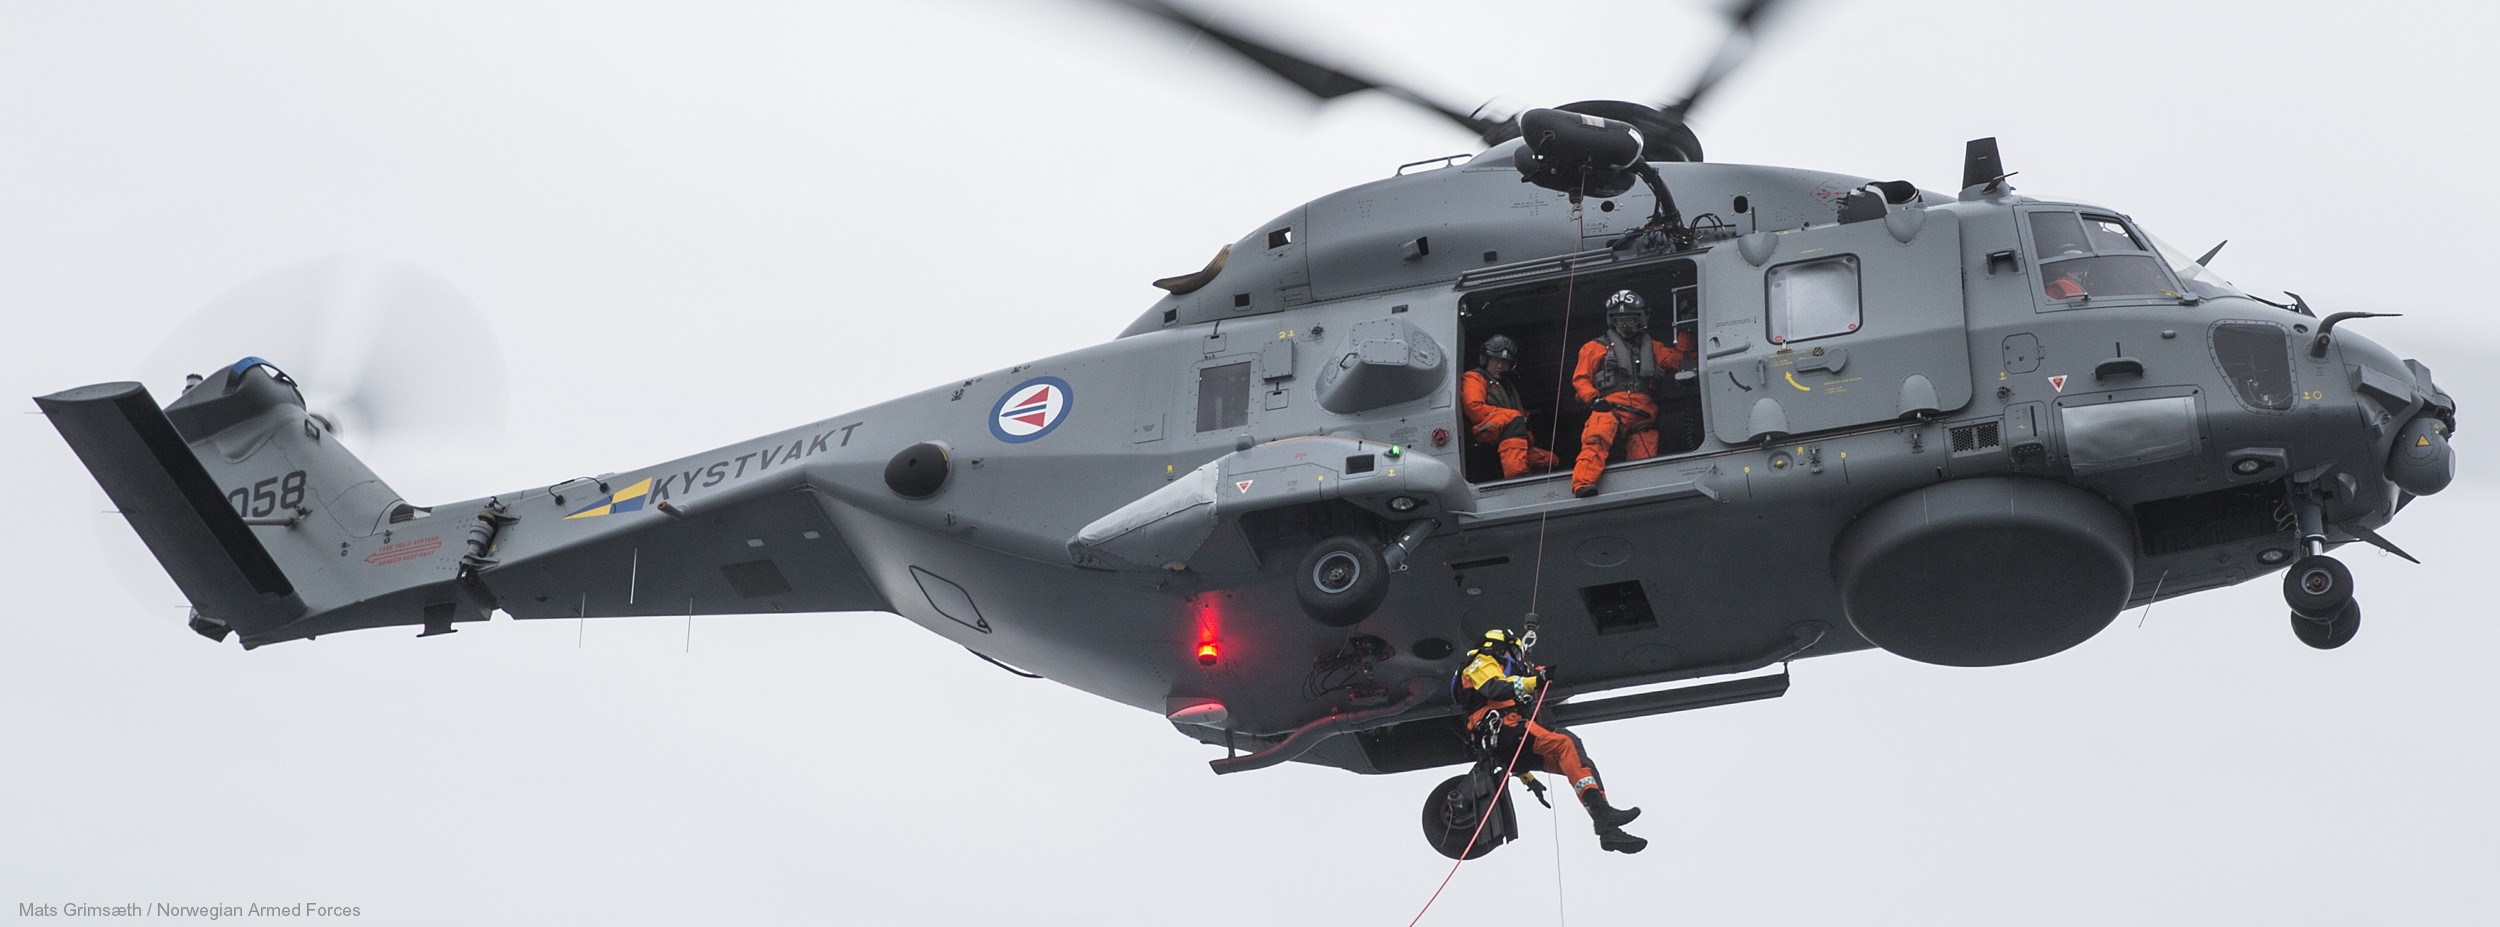 nh90 nfh asw helicopter royal norwegian coast guard navy air force kystvakt sjoforsvaret 058 04